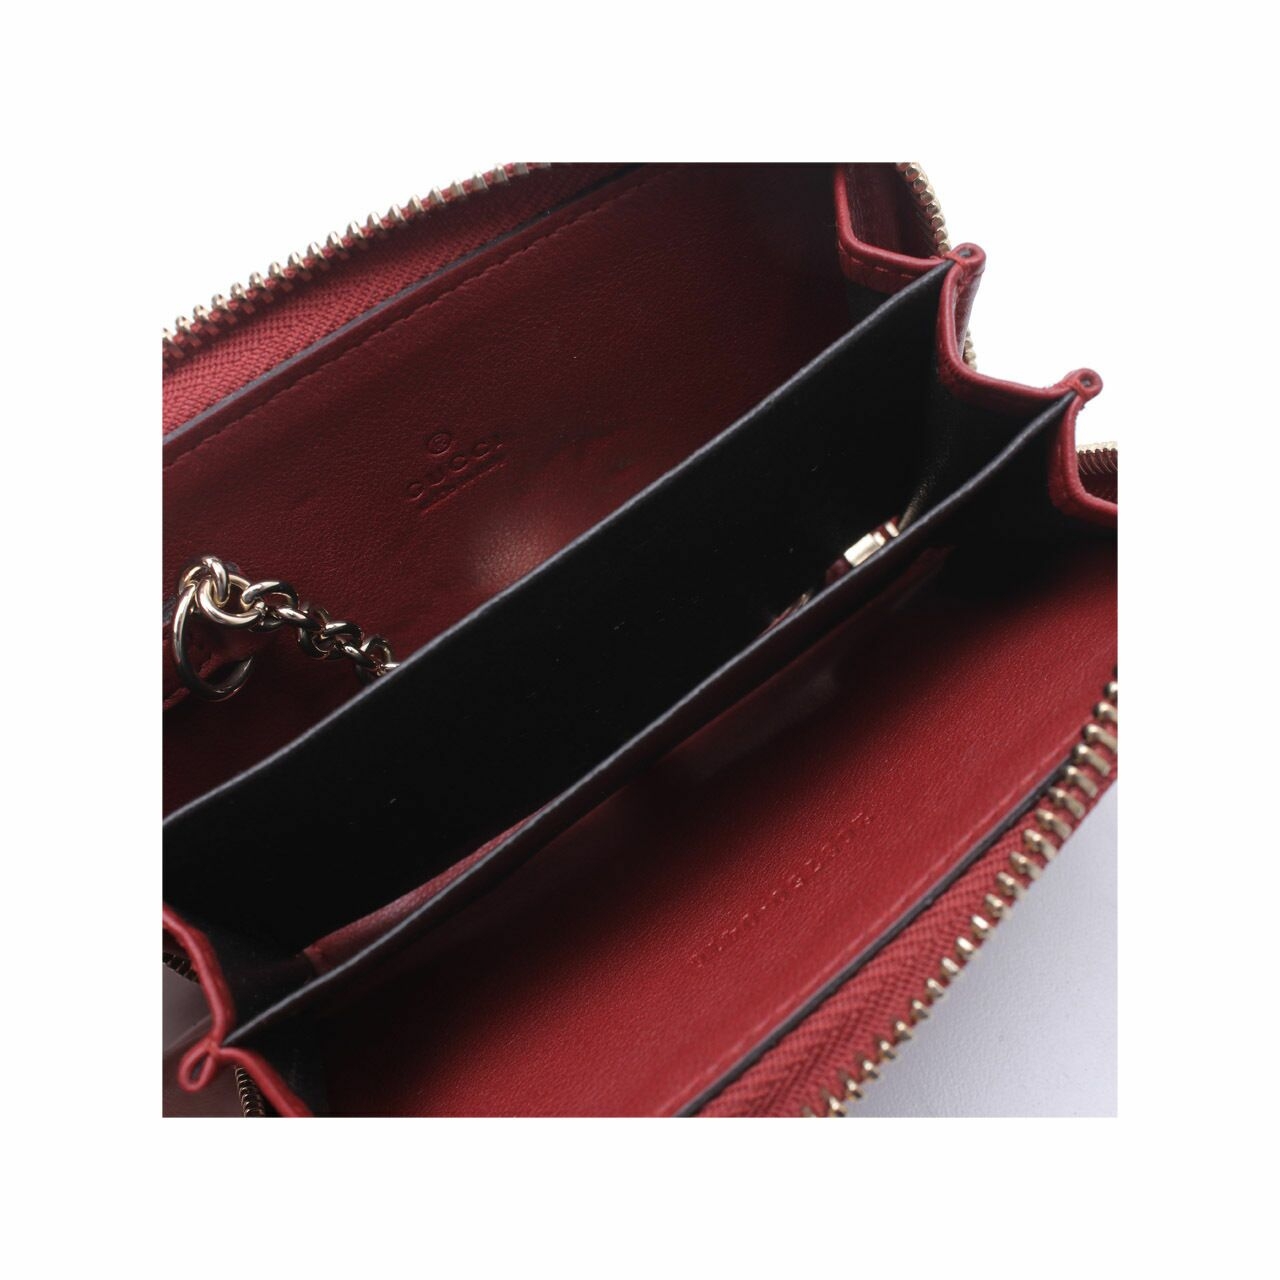 Gucci Guccissima Red Card Case Zip Around Wallet